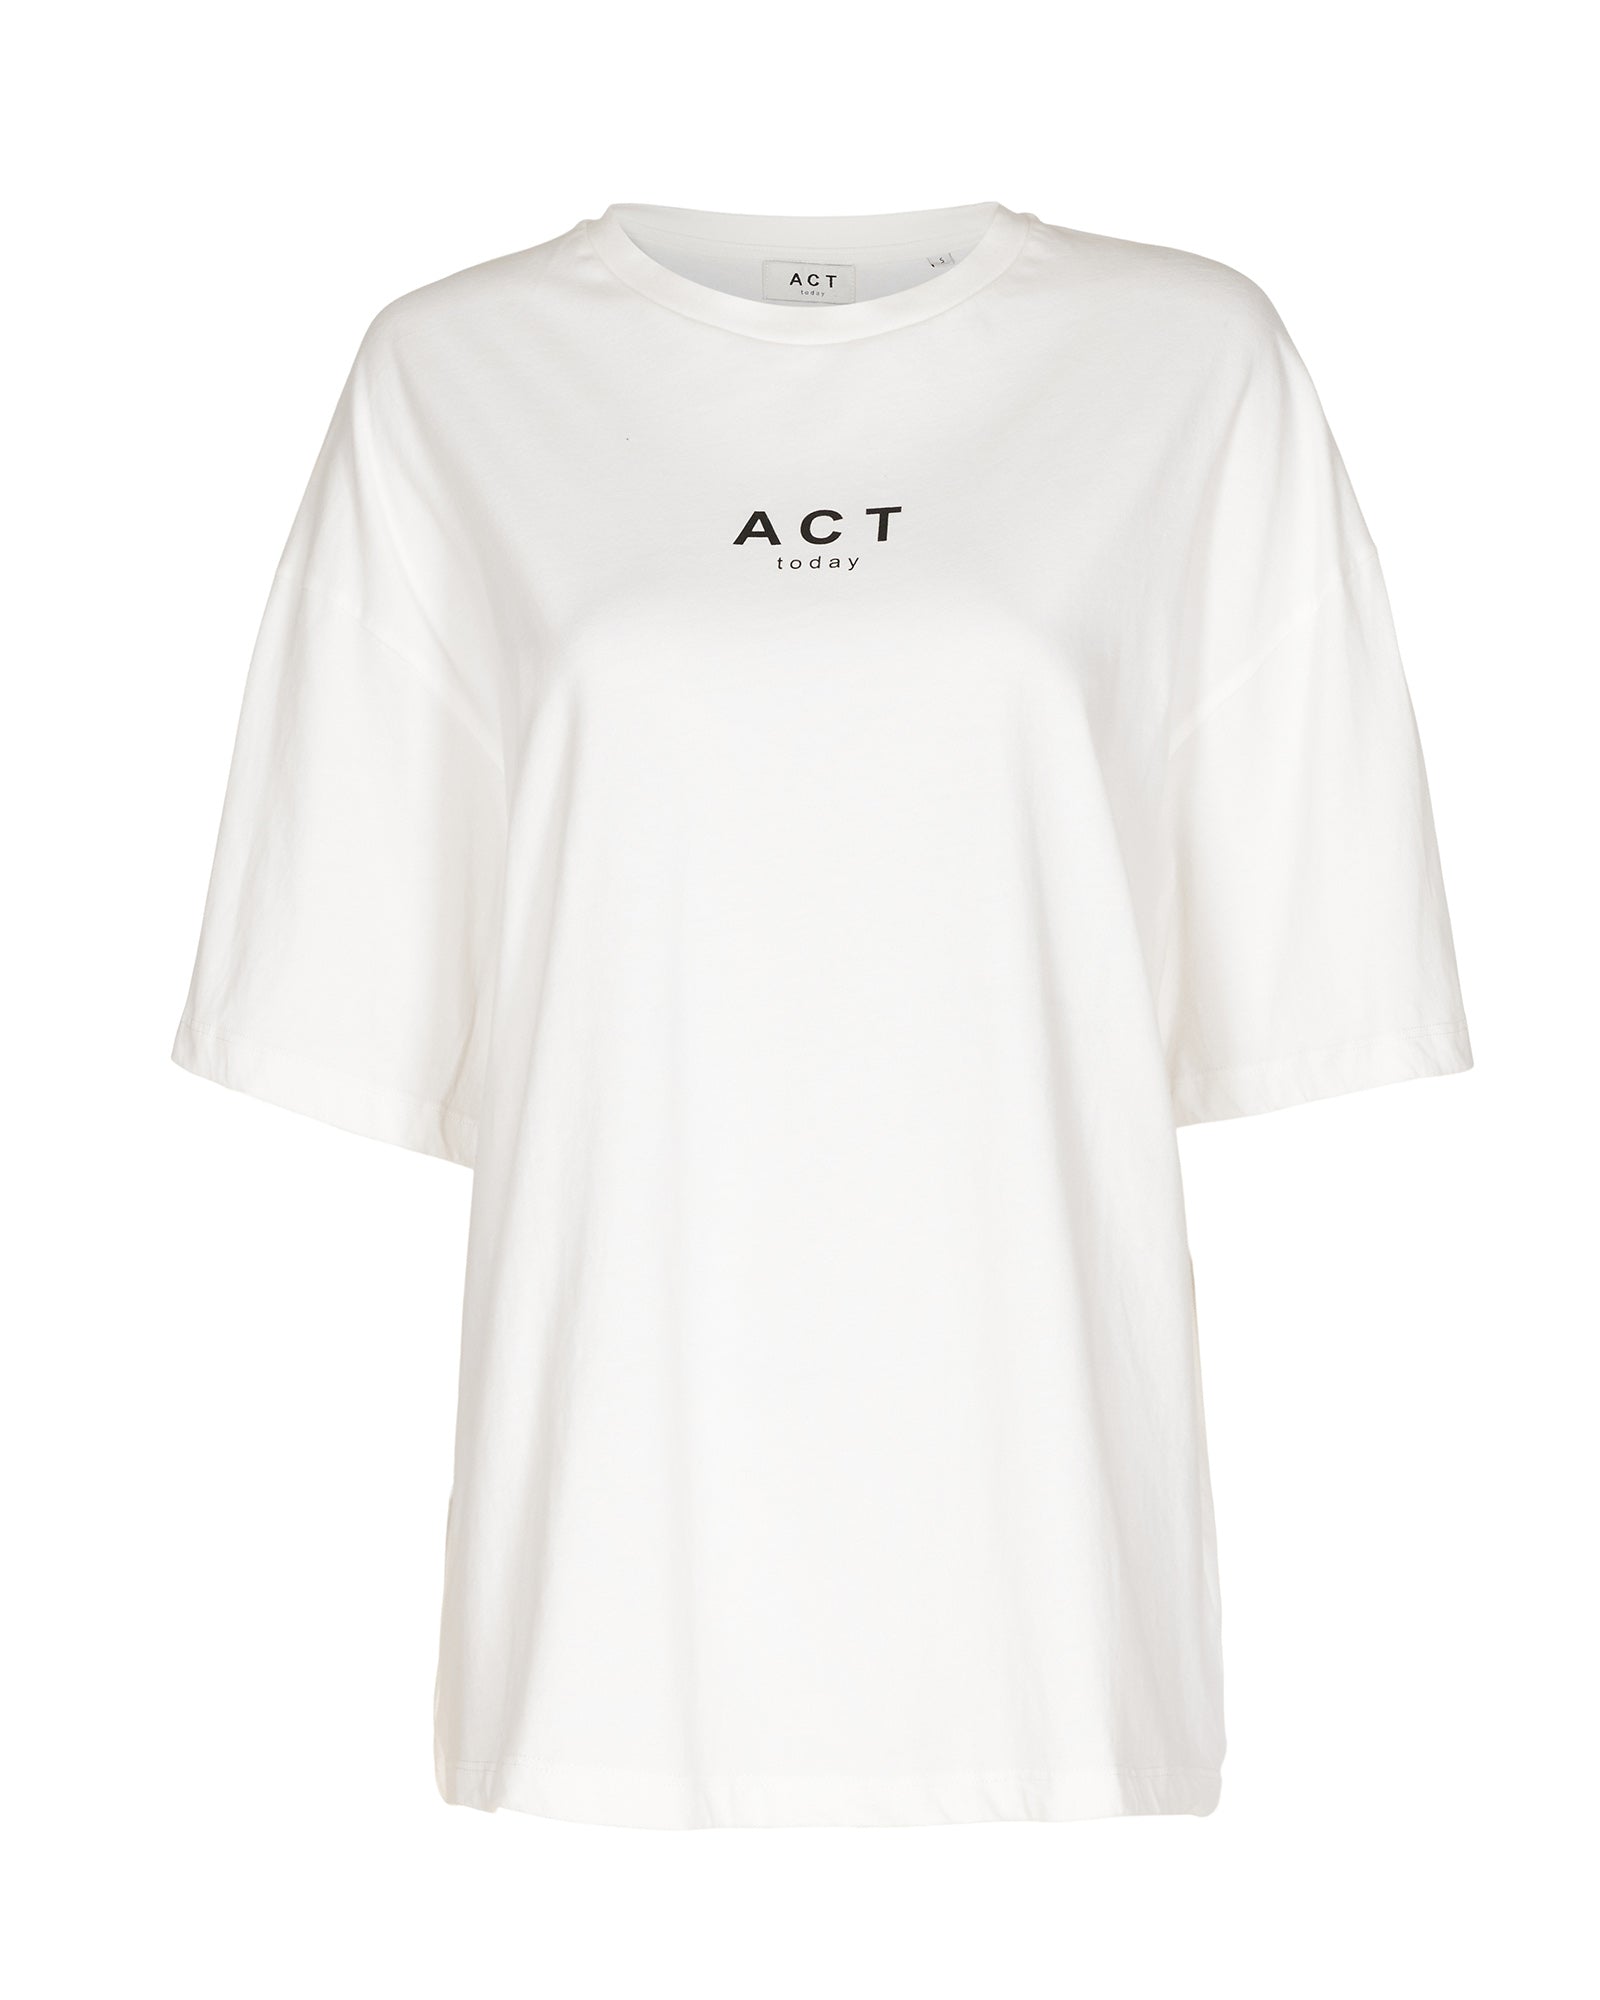 ACT today KIM t-shirt T-Shirt 001 White